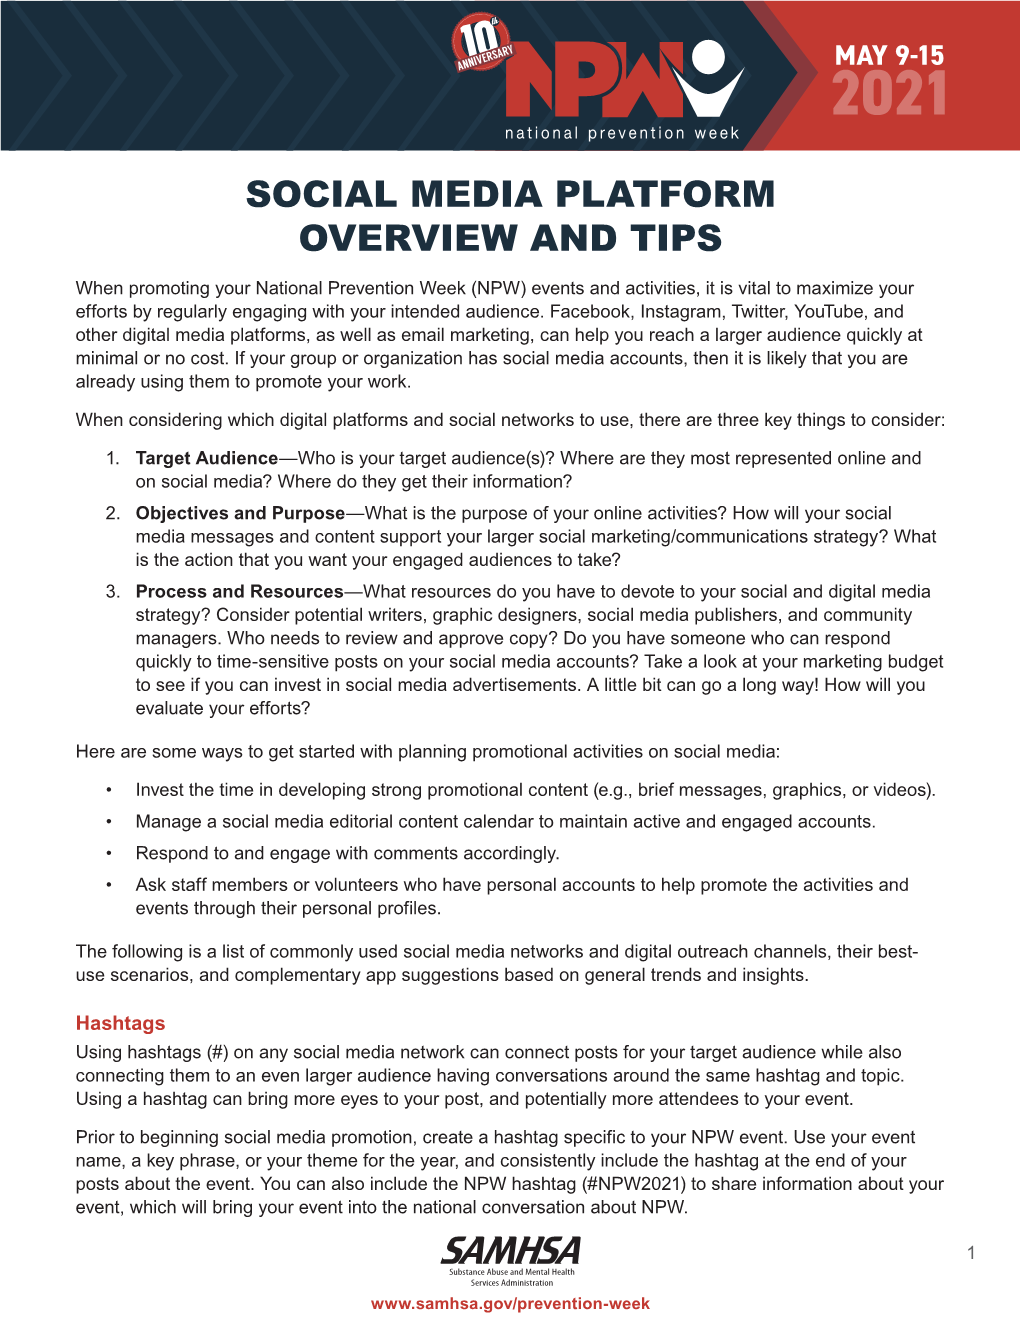 Social Media Platform Overview and Tips